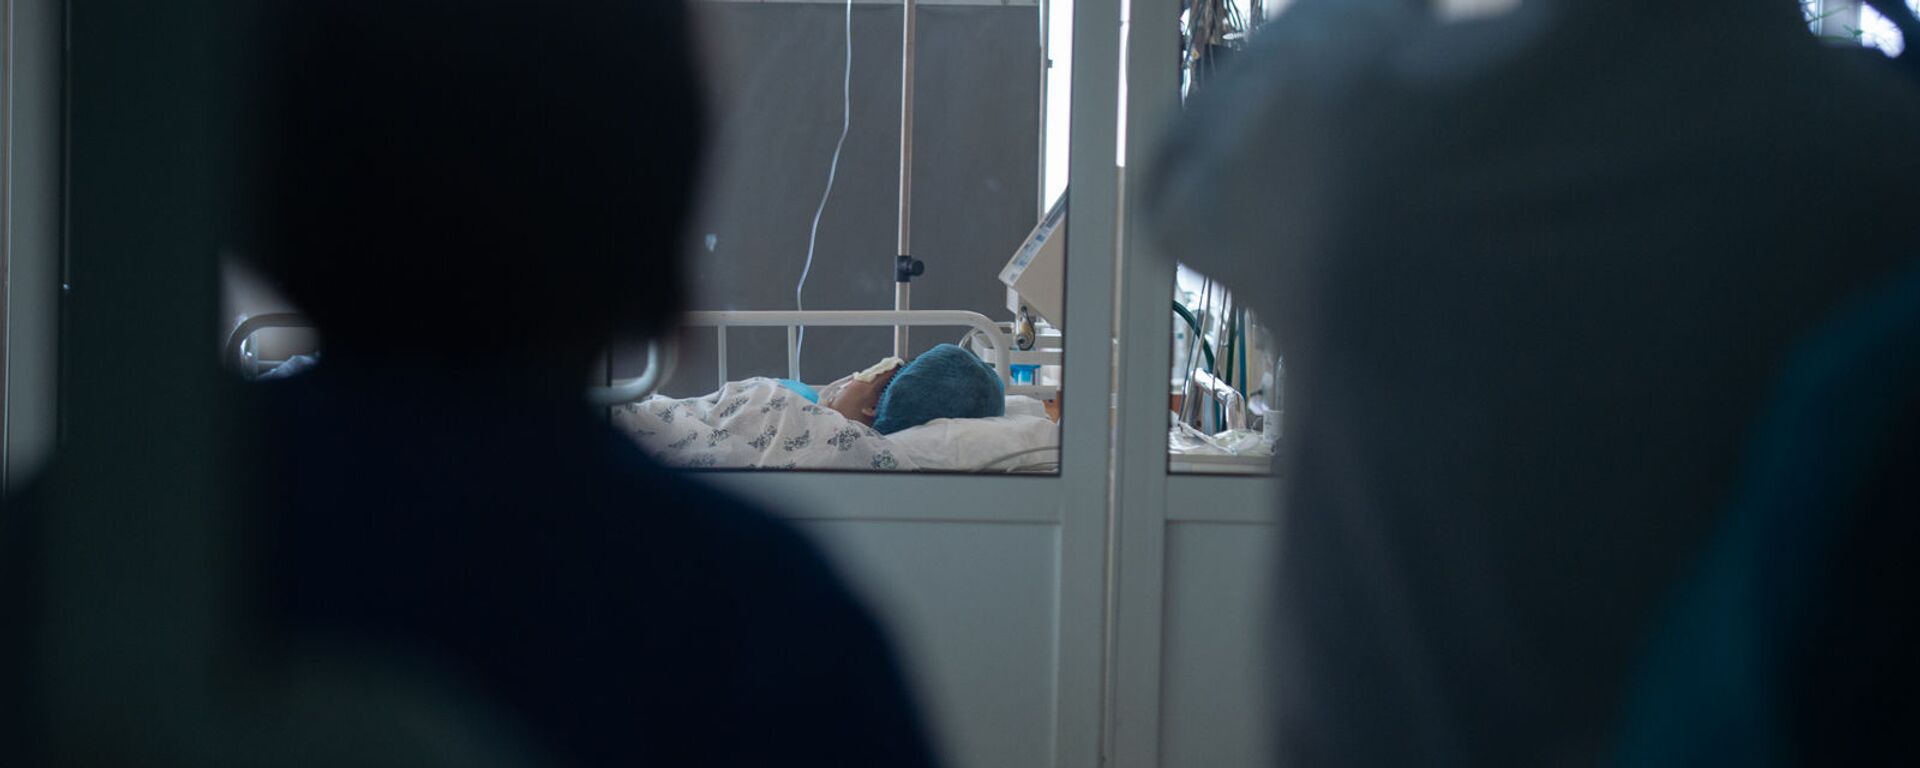 Пациент в медцентре «Сурб Аствацамайр» - Sputnik Արմենիա, 1920, 03.05.2021